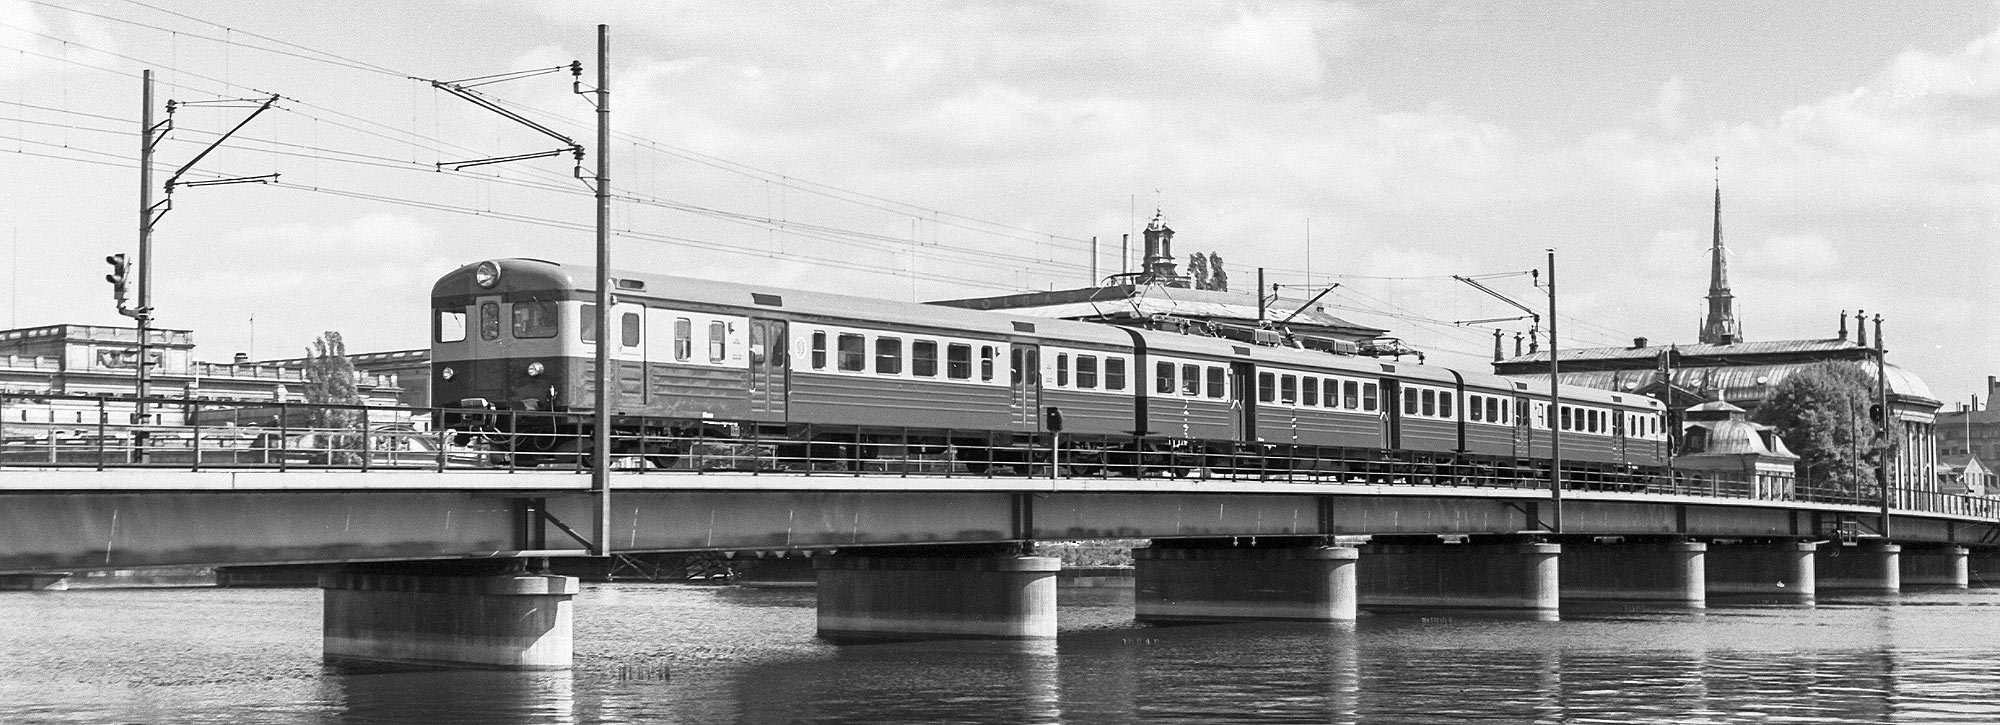 Xoa6 i Stockholm 1960